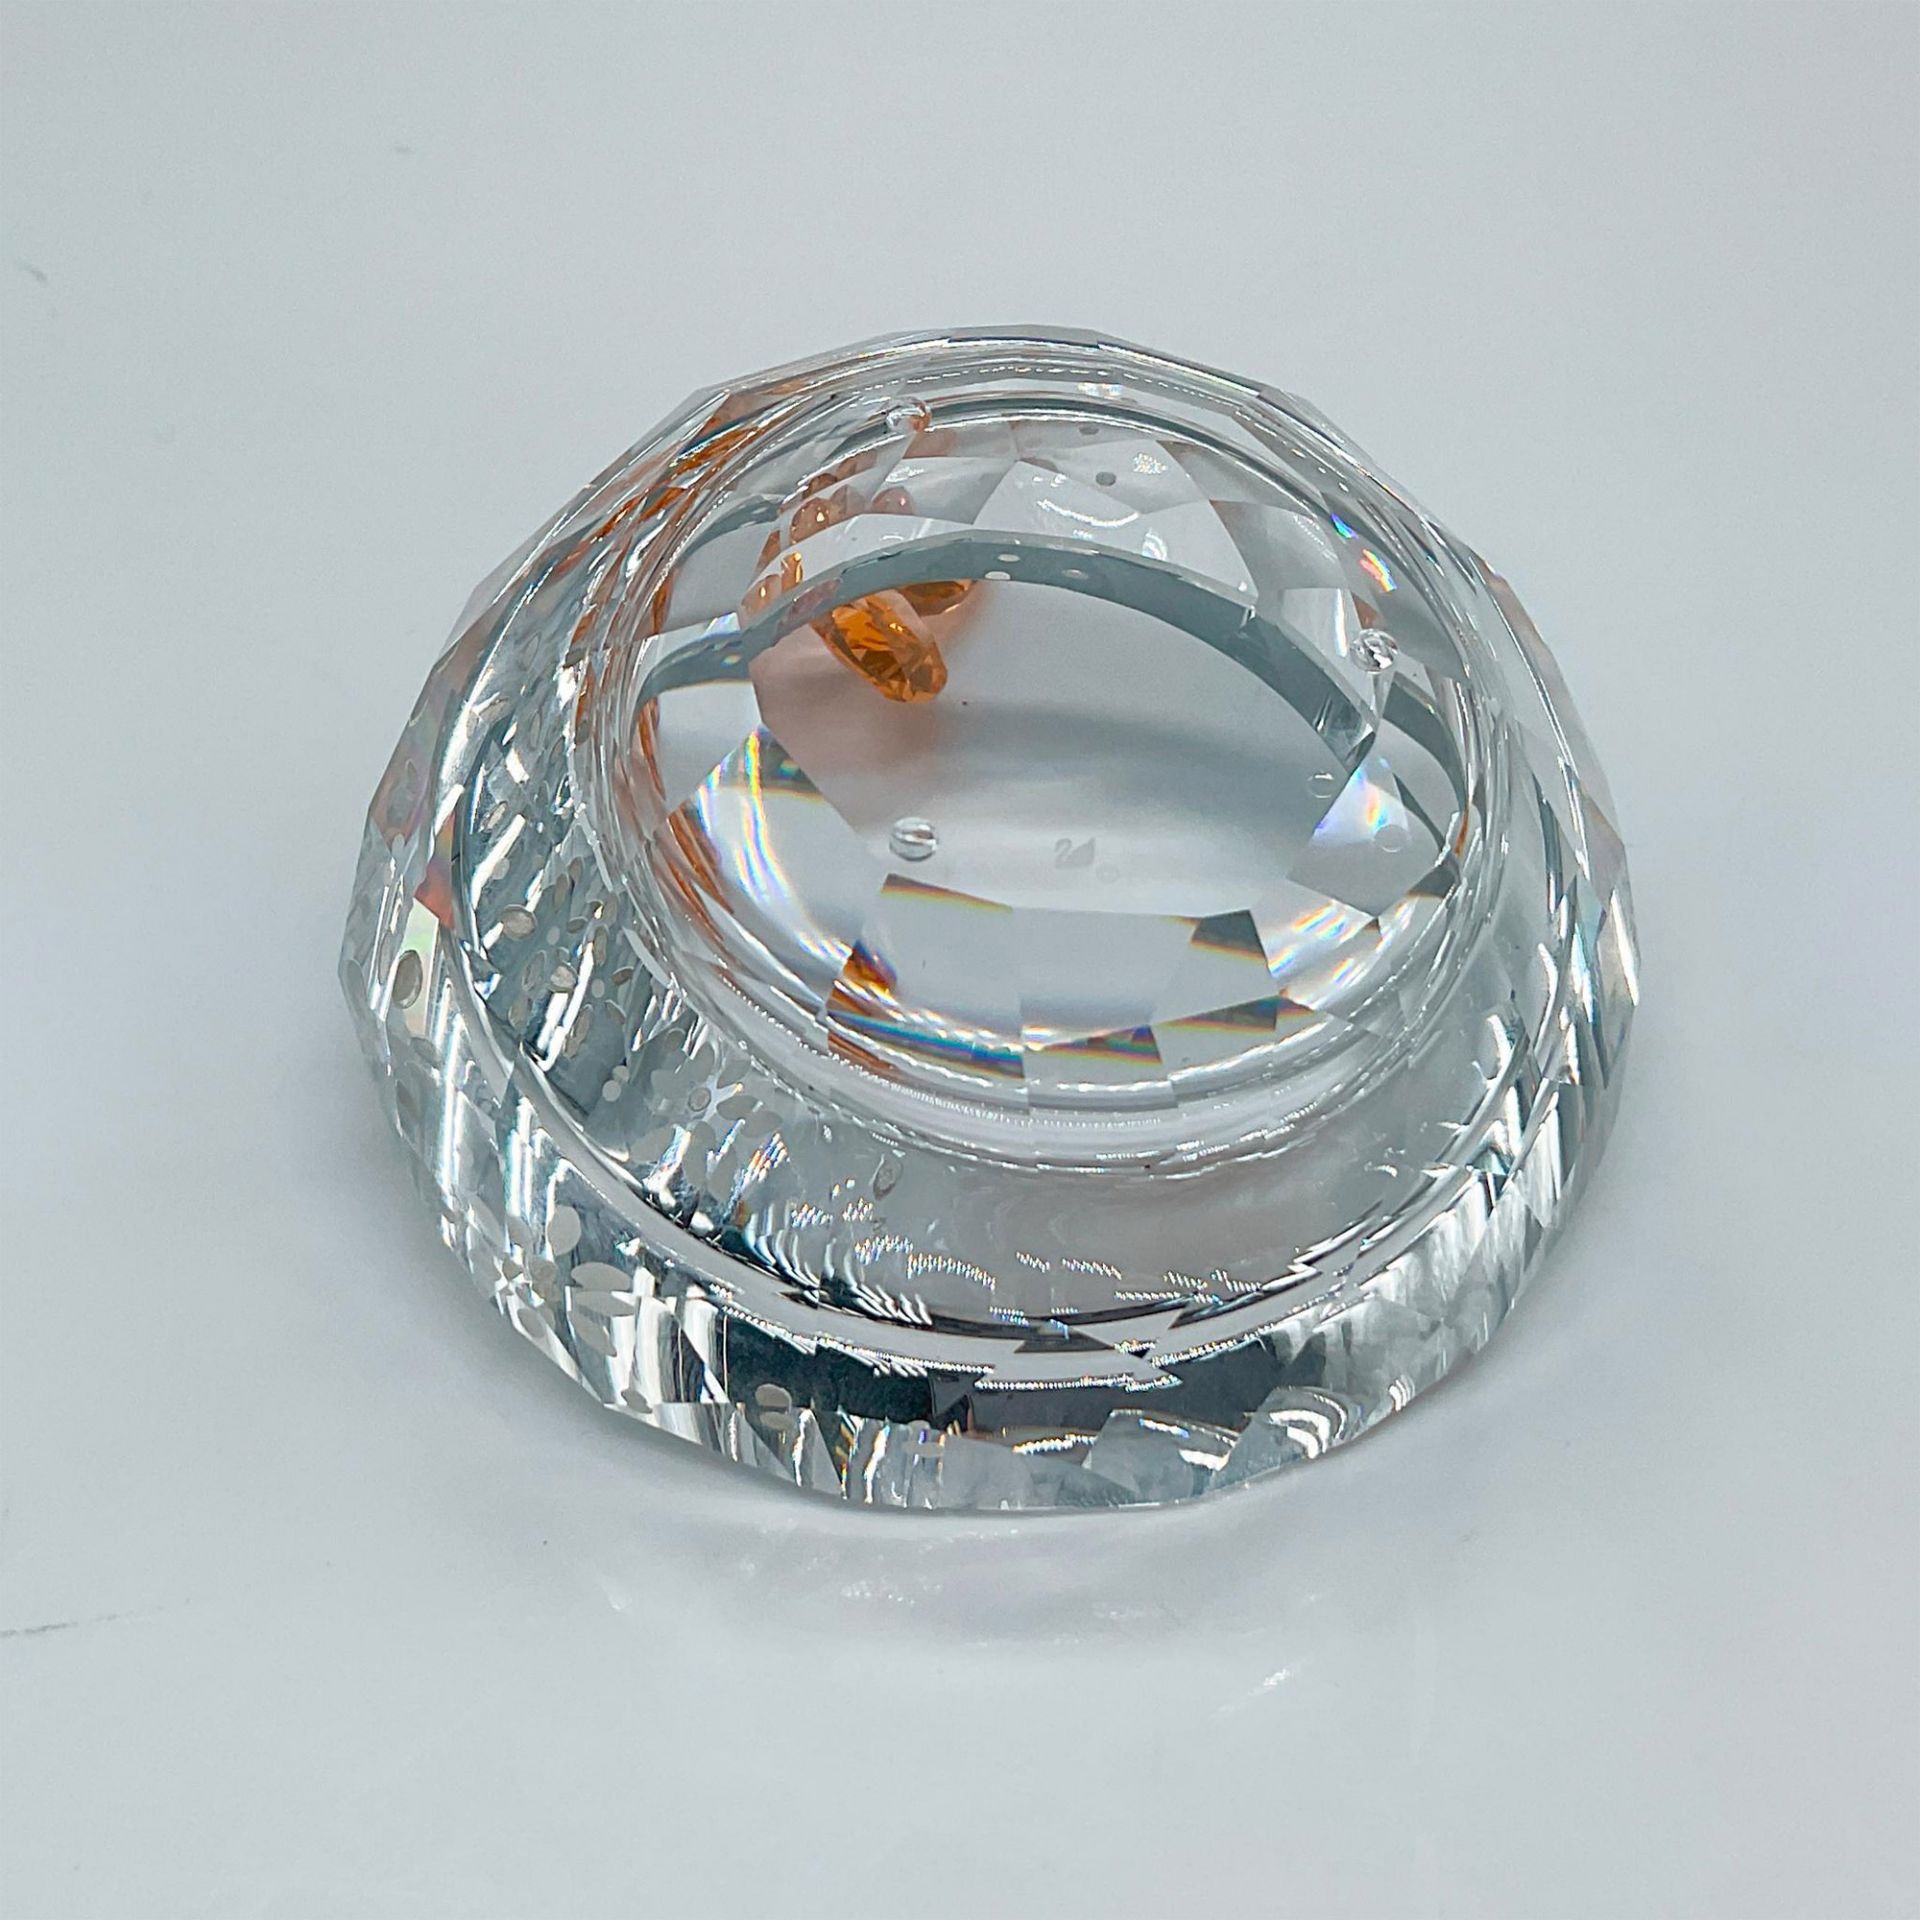 Swarovski Crystal Tea Light Holder, Butterfly - Image 3 of 3